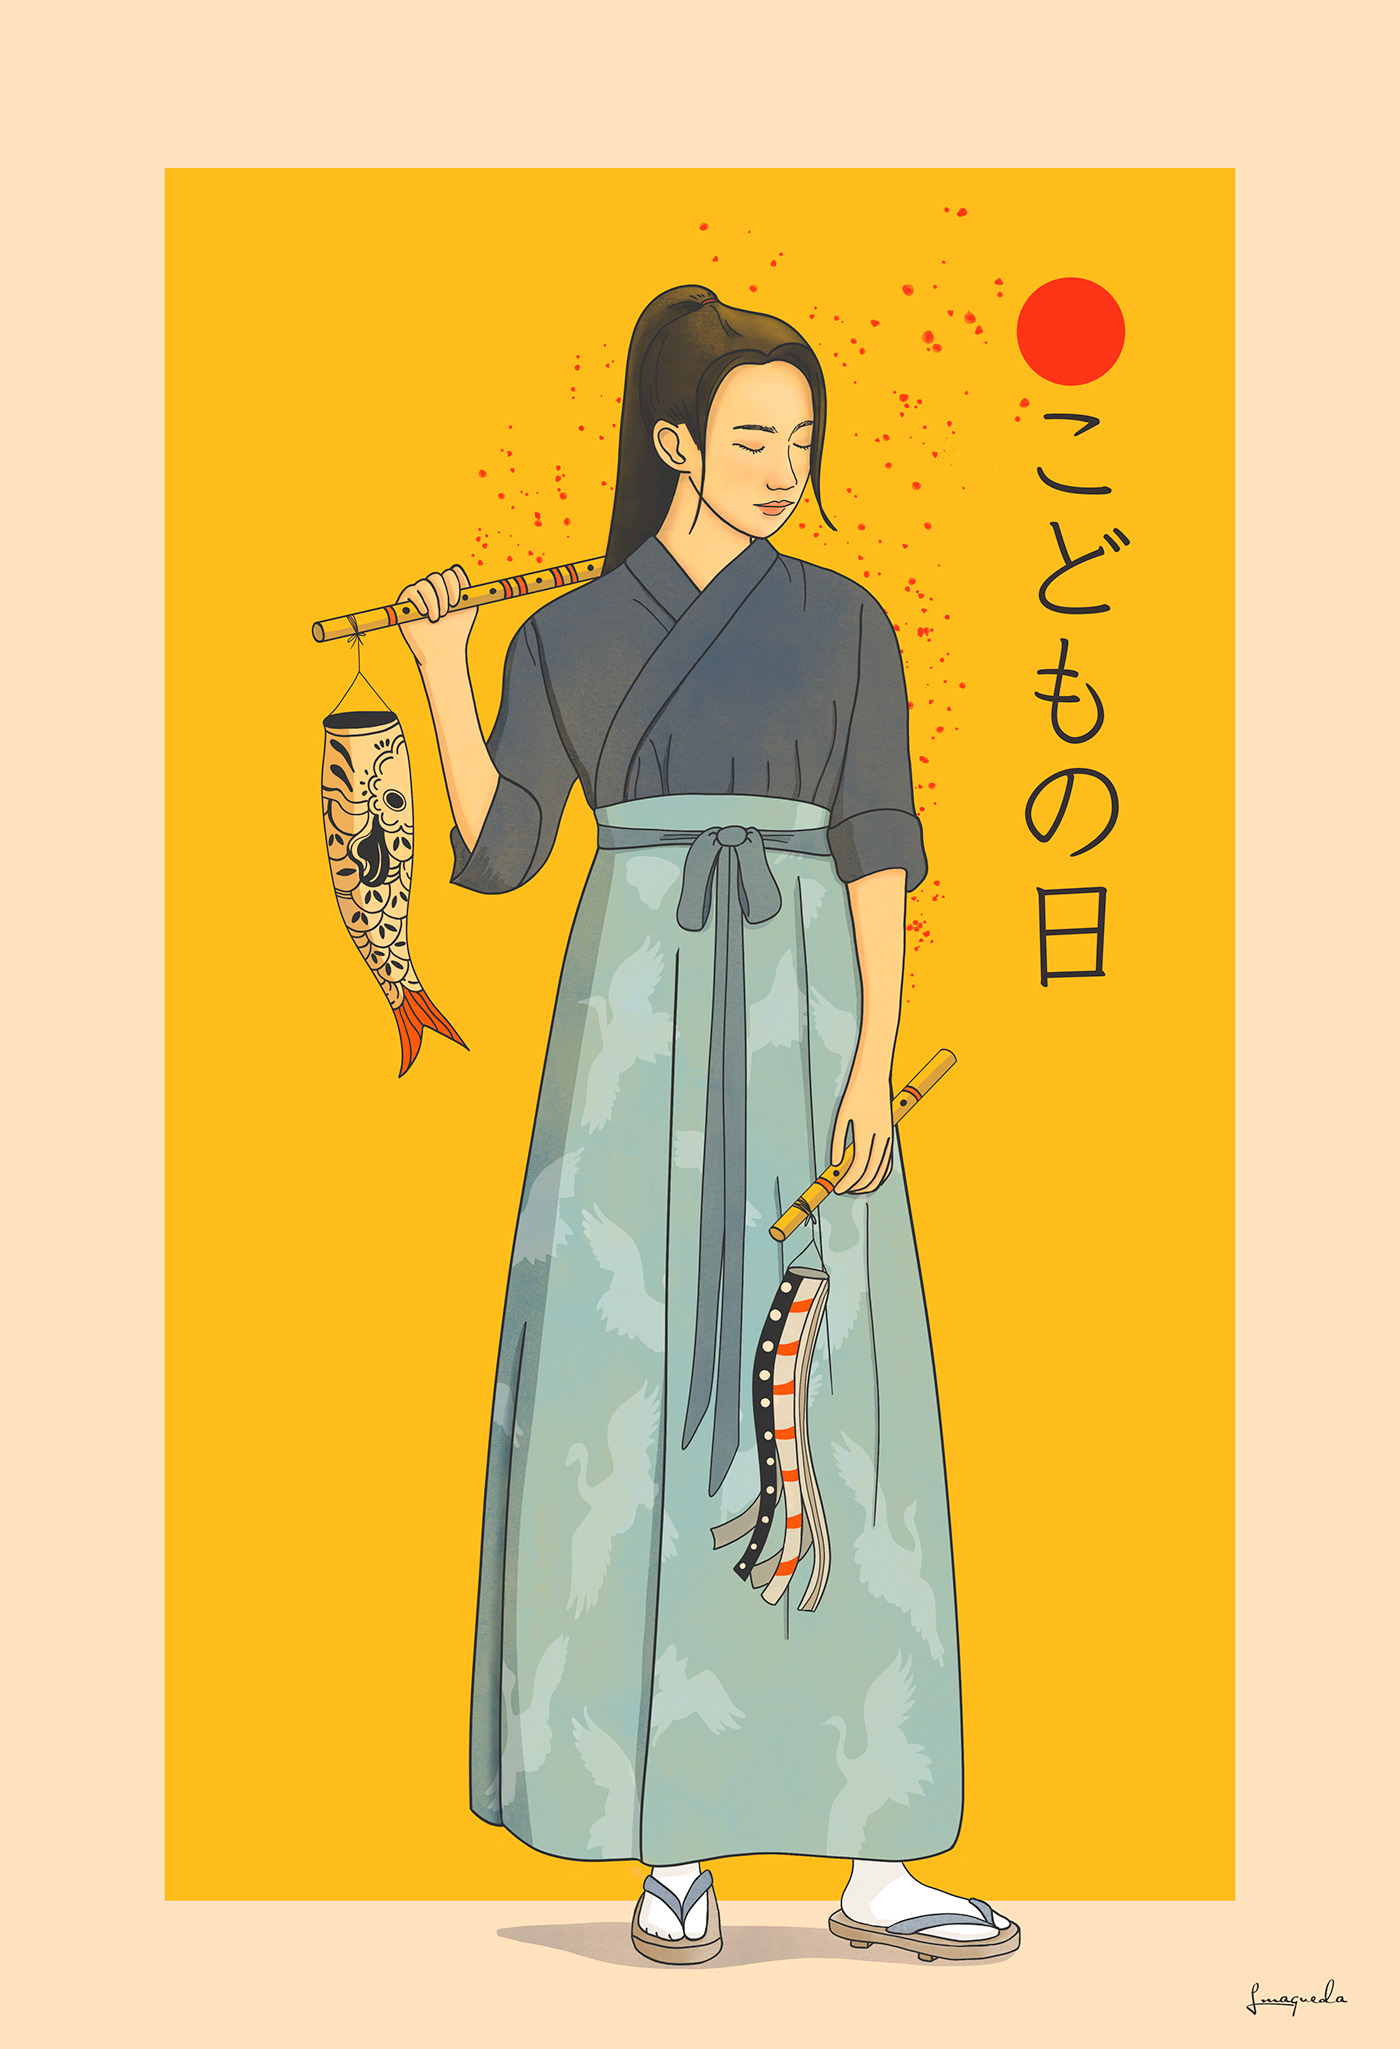 JAPON Digital Art  ILLUSTRATION  japanese style oriental Poster Design kodomo no hi